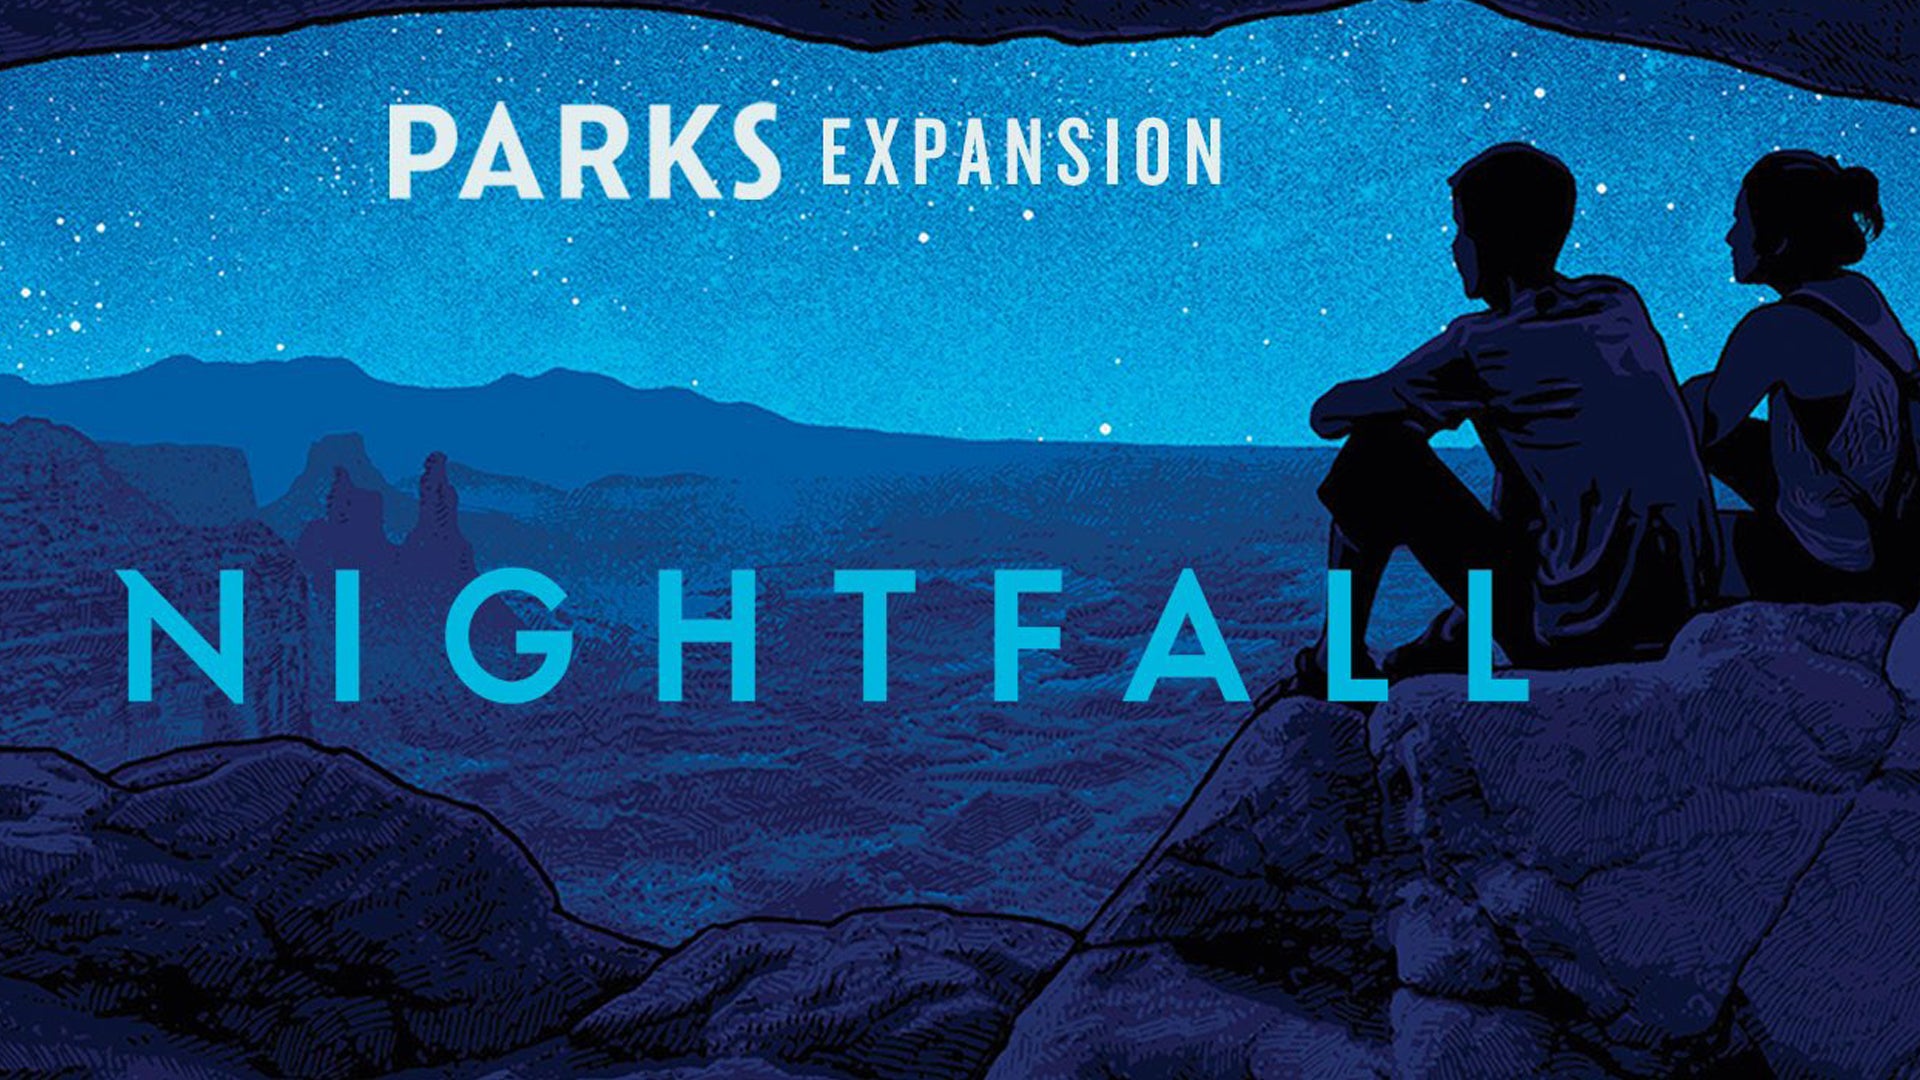 Parks: Nightfall board game artwork